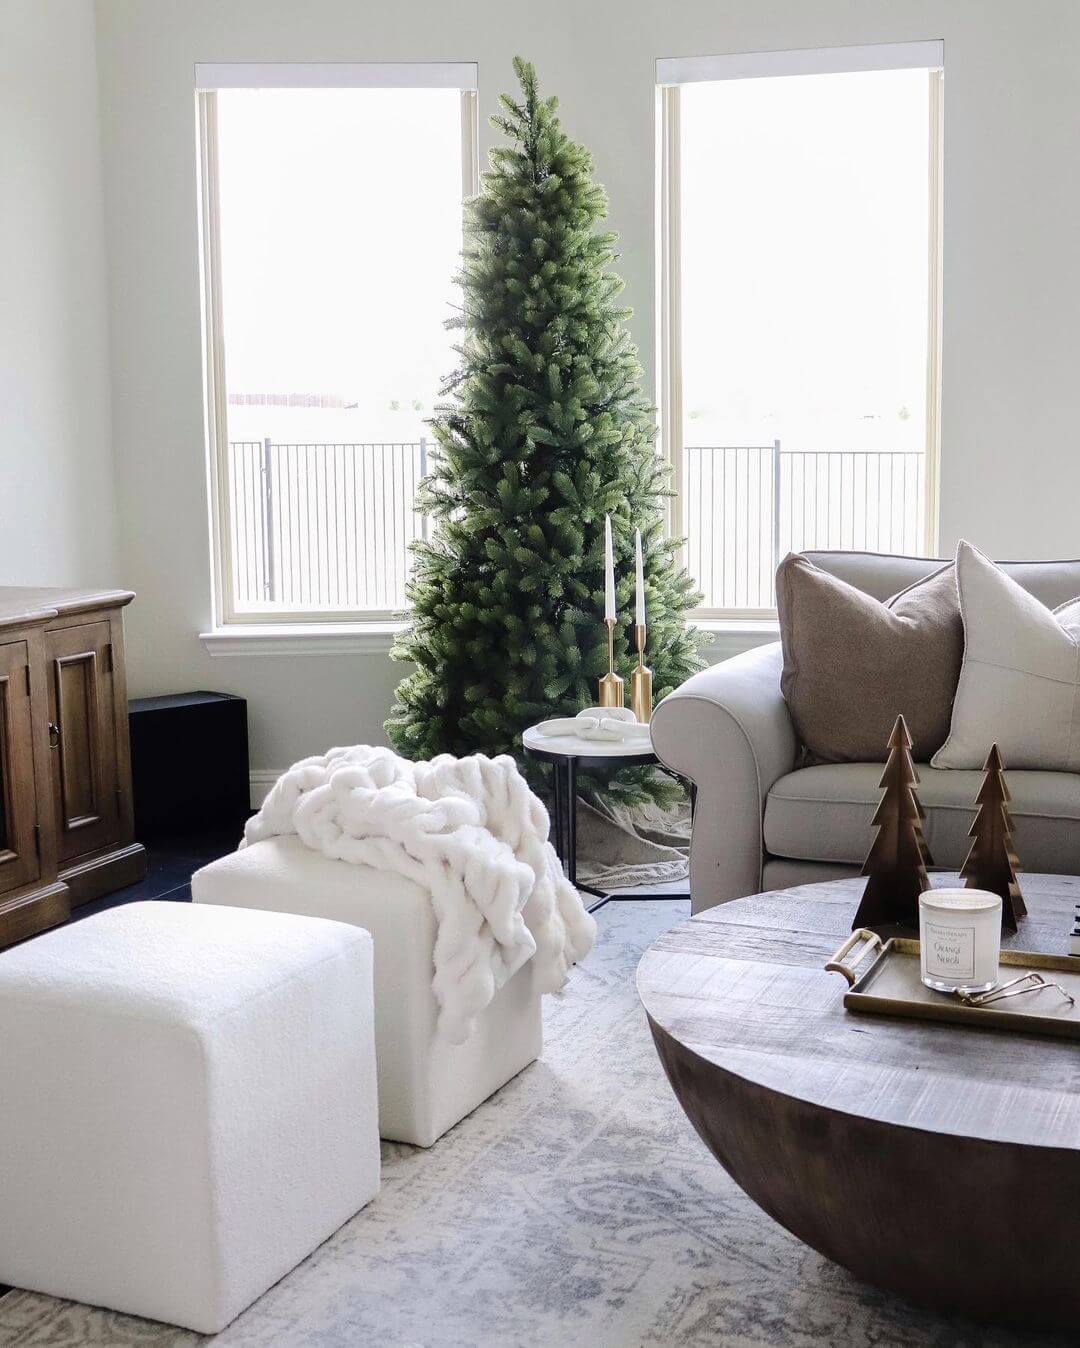 6.5' Royal Fir Slim Quick-Shape Artificial Christmas Tree Unlit